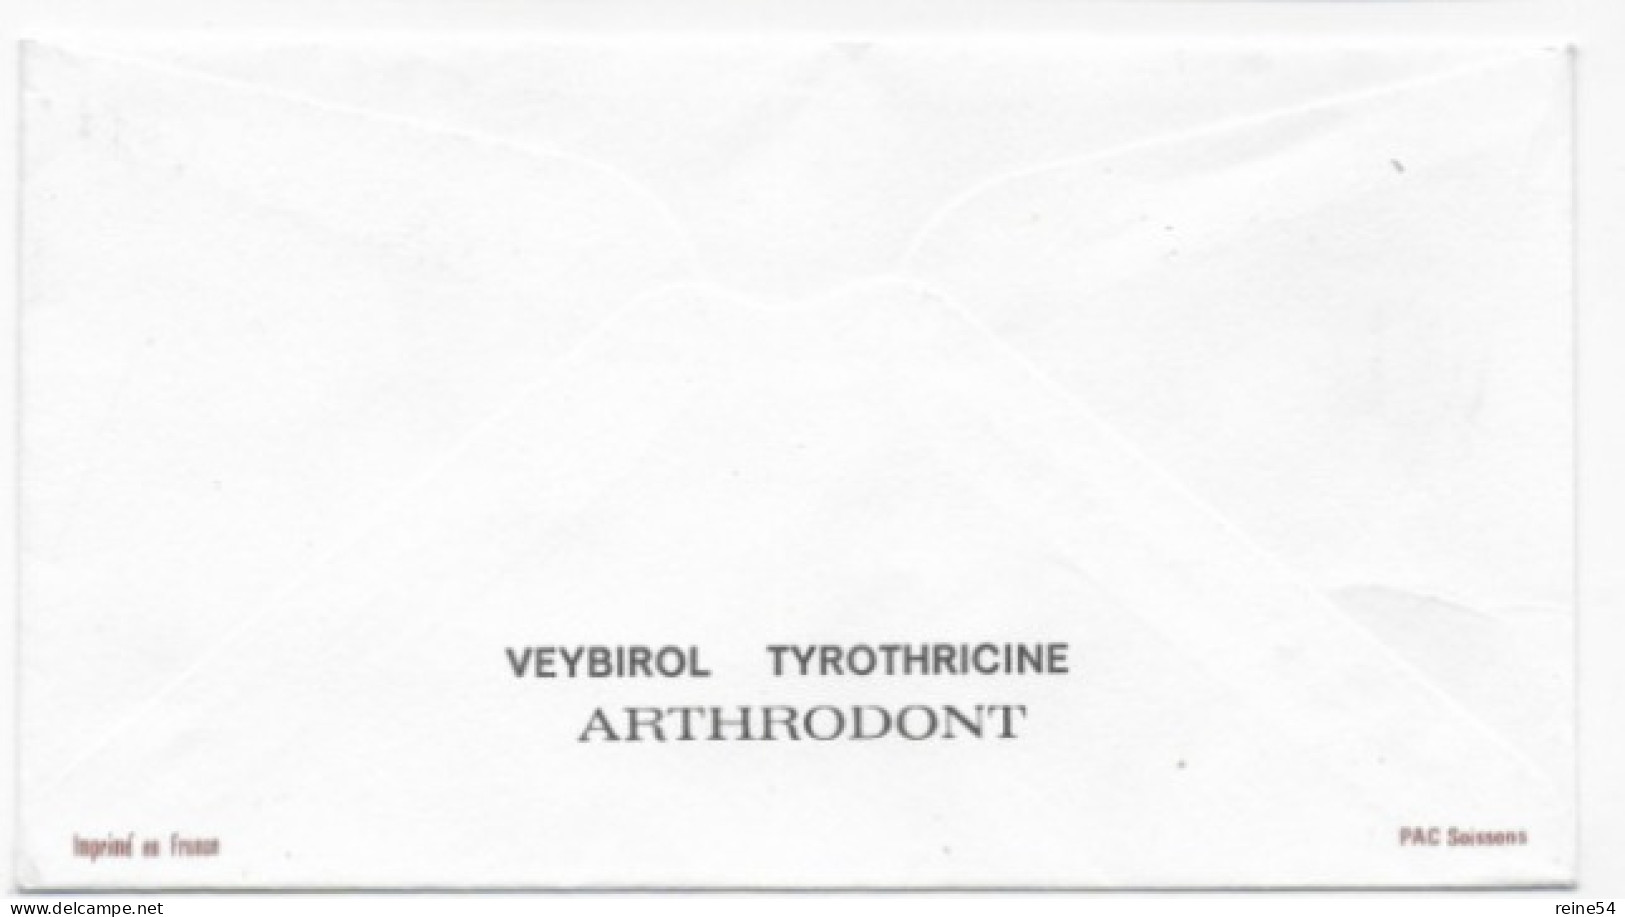 Enveloppe Premier Jour - Ulrie Zwingli 18-09-1969  Bern Ausgabetag  Helvetia (circulé) - Gebruikt